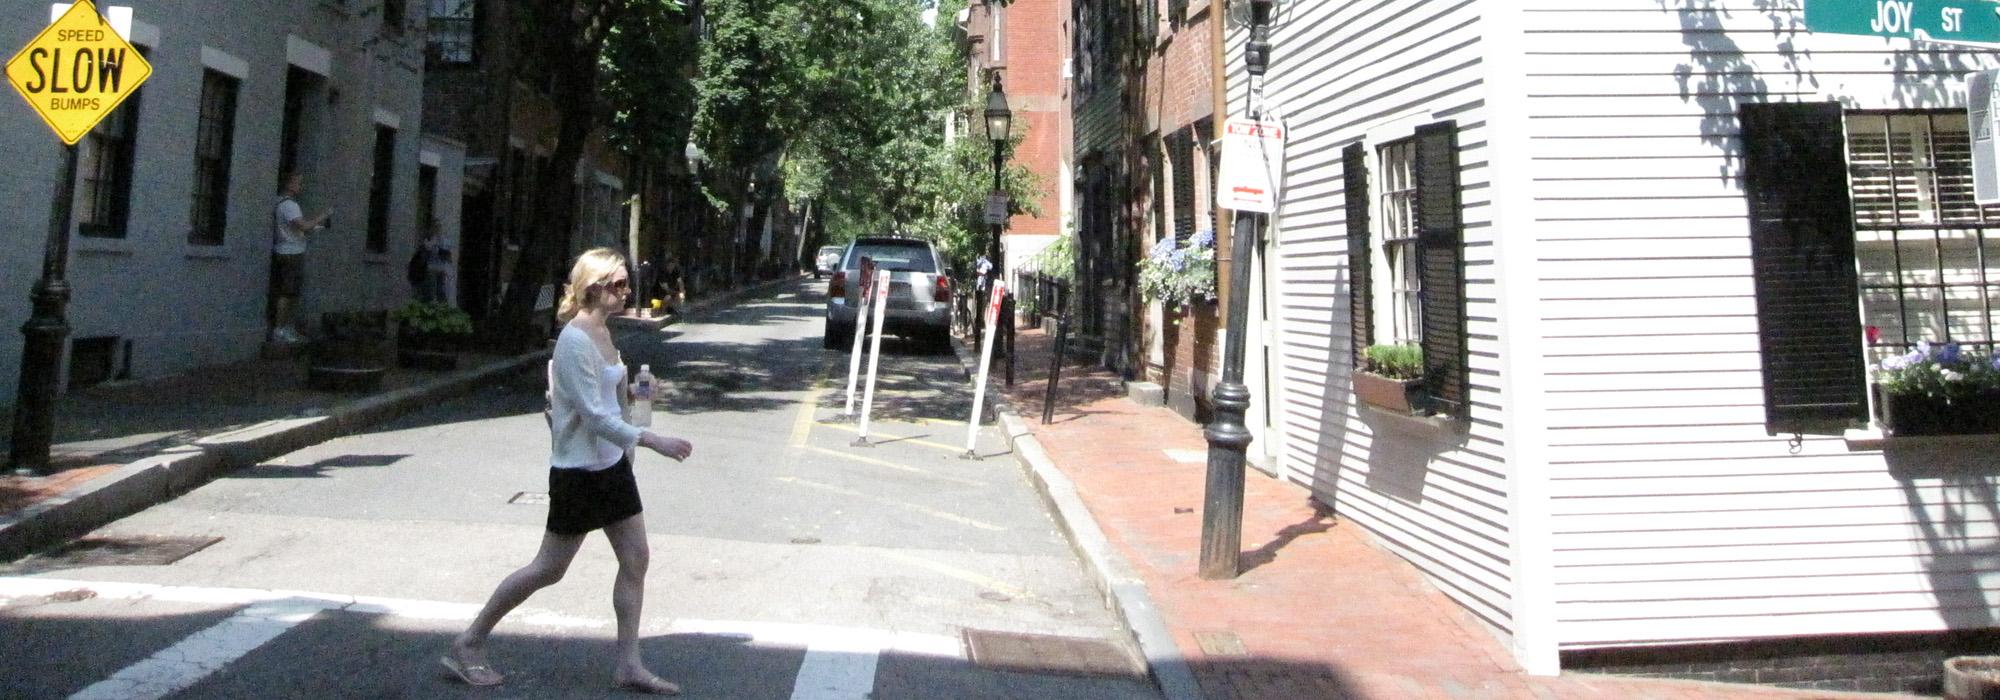 Intersection of Pinckney and Joy Streets, Boston, MA